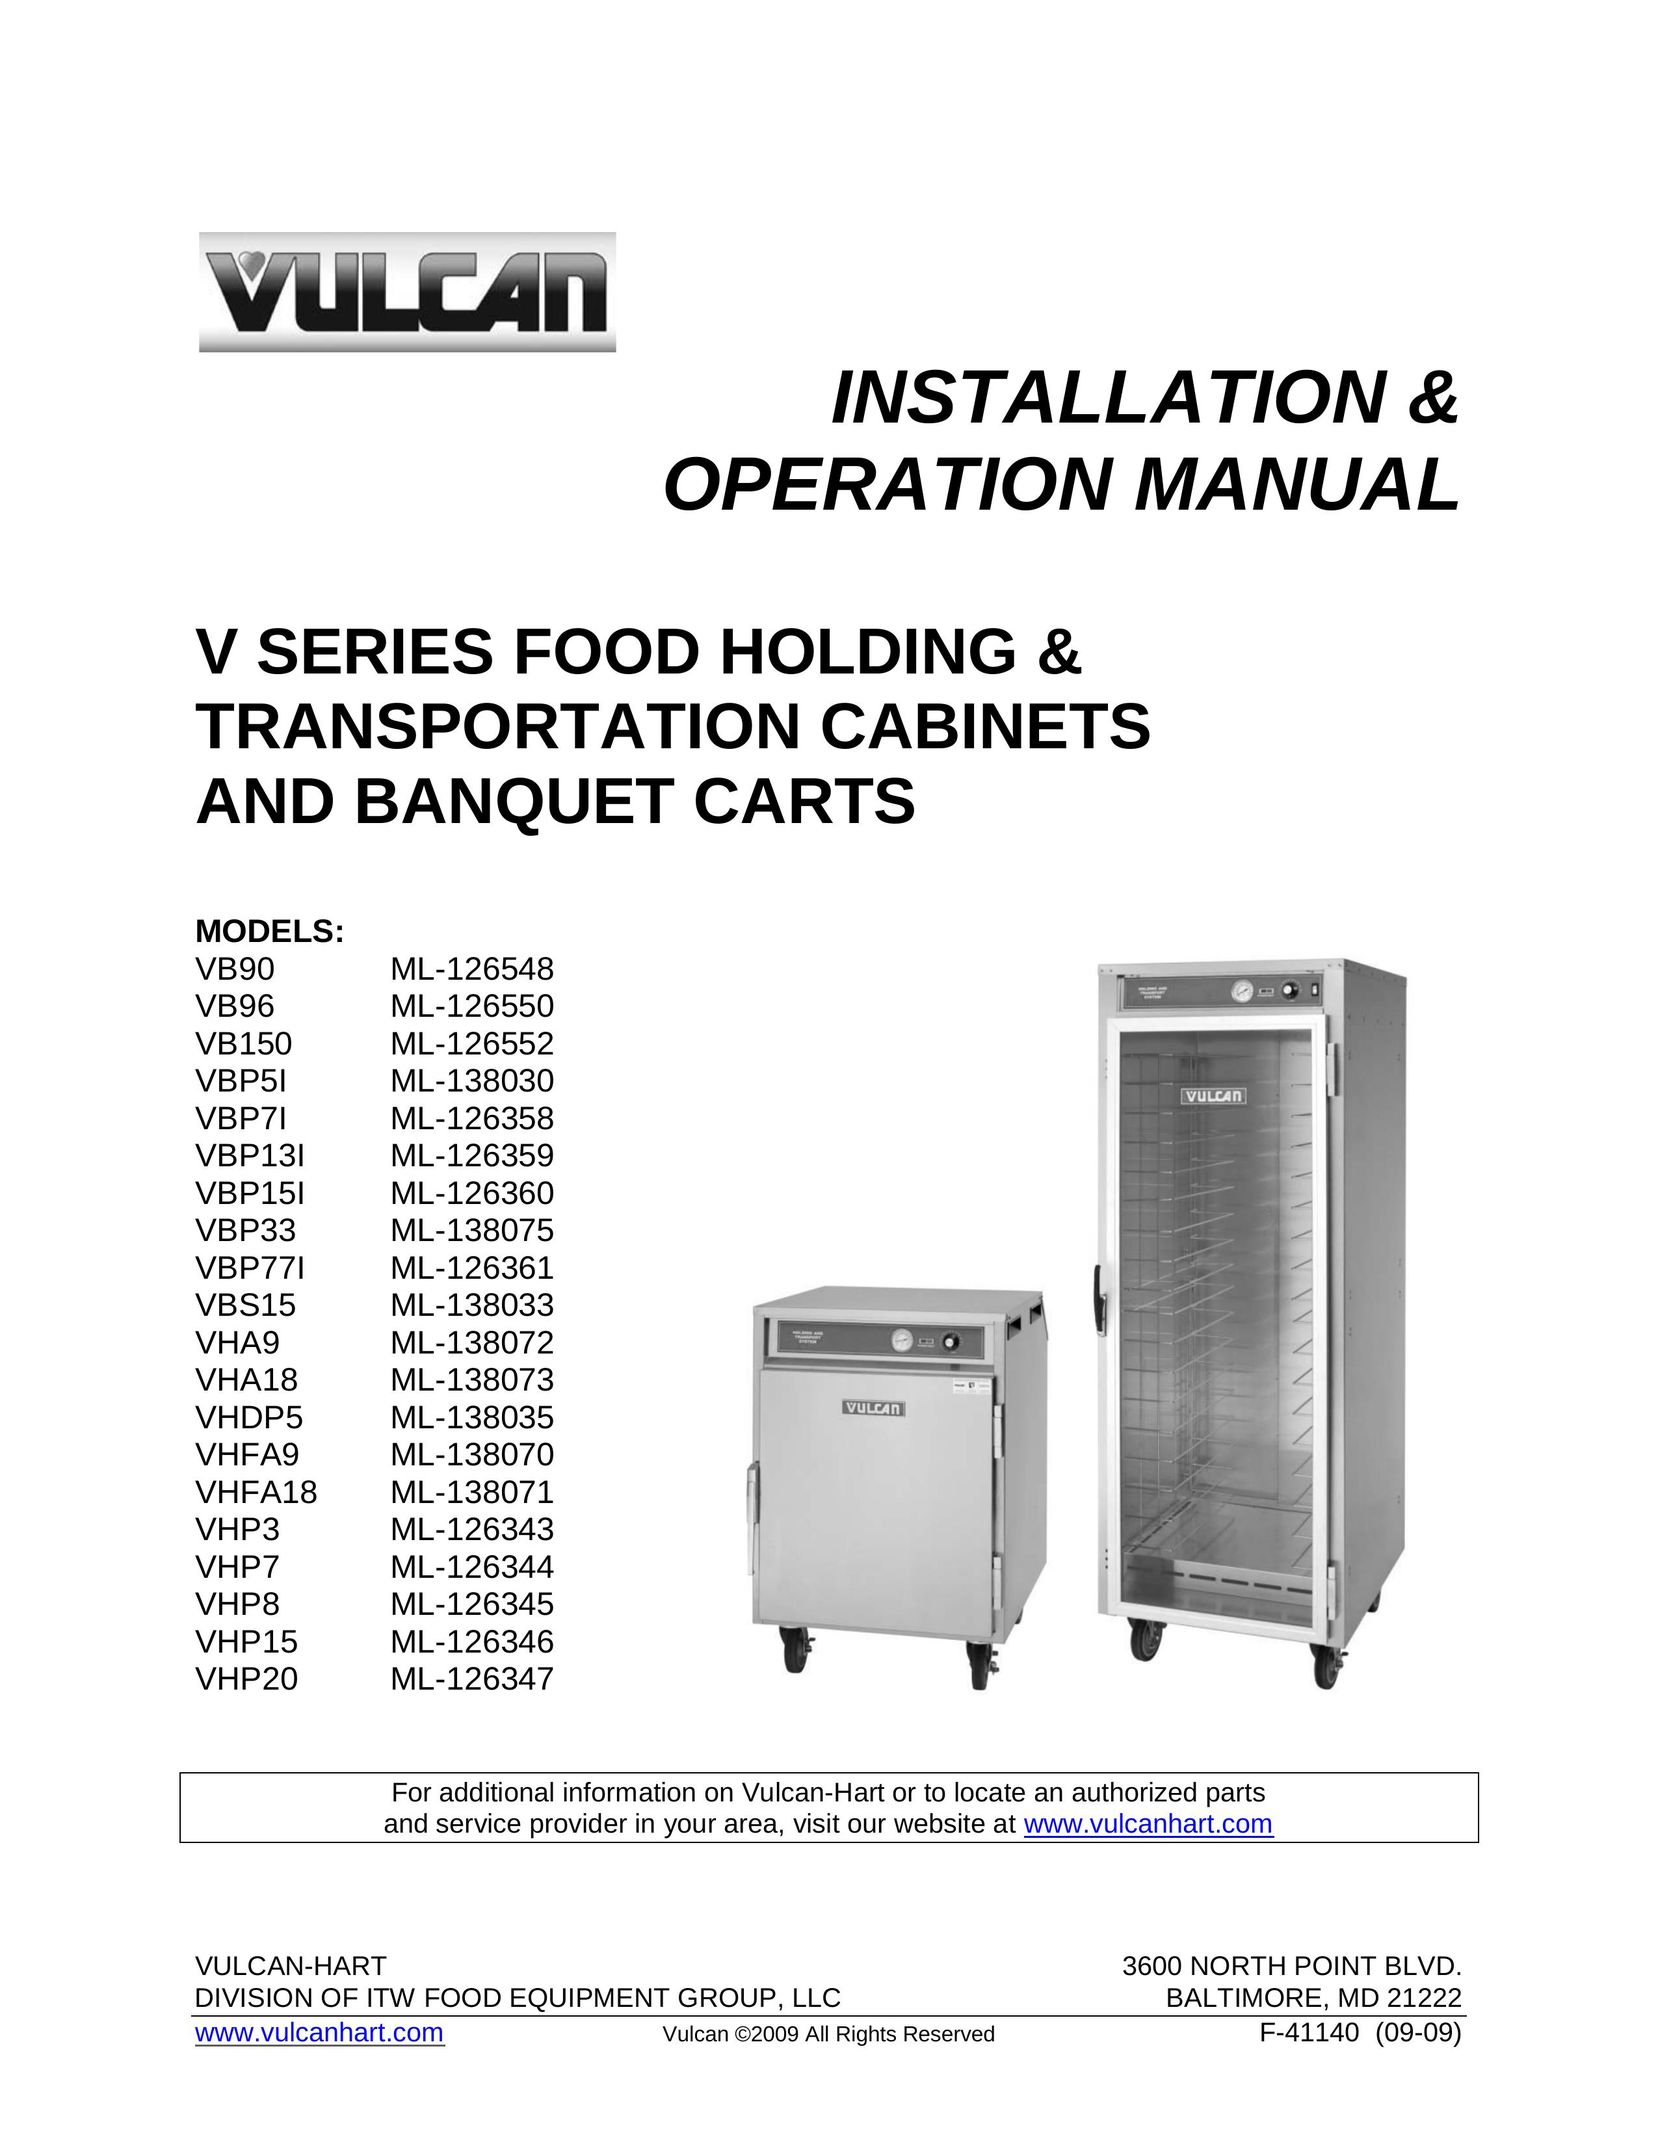 Vulcan-Hart VHDP5 ML-138035 Food Warmer User Manual